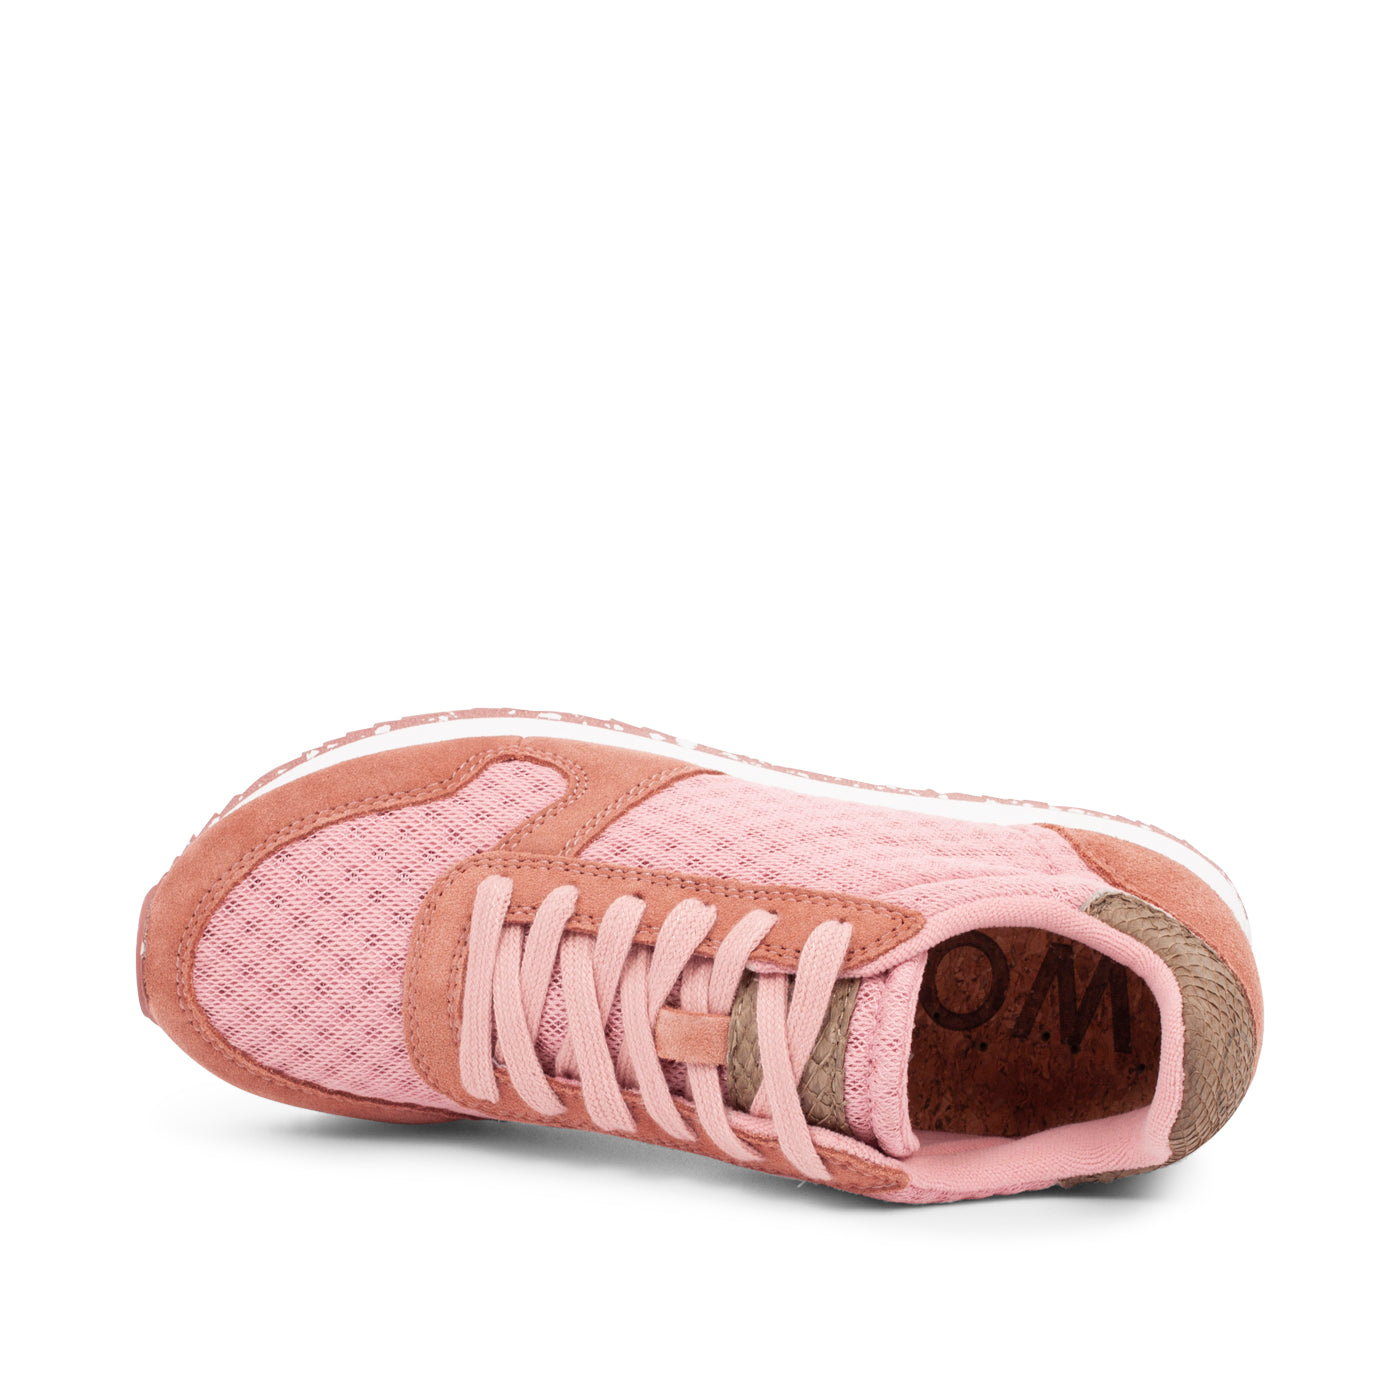 WODEN Ydun Suede Mesh II Sneakers 766 Canyon Rose/Soft Pink